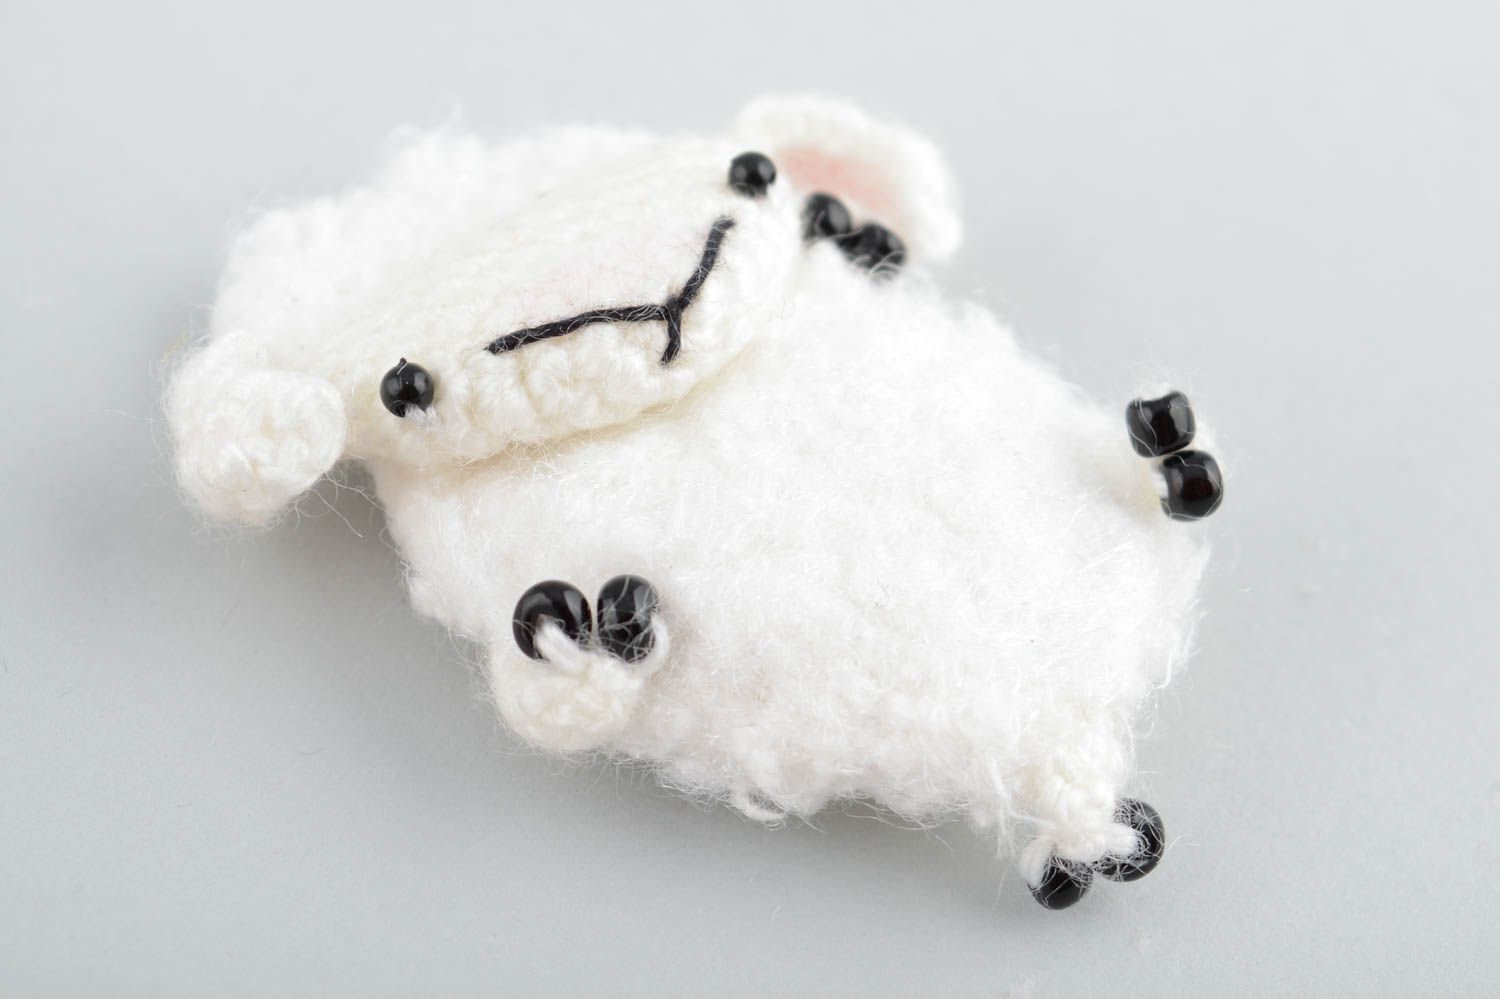 Soft crocheted amigurumi toy white lamb small handmade decorative fridge magnet photo 4